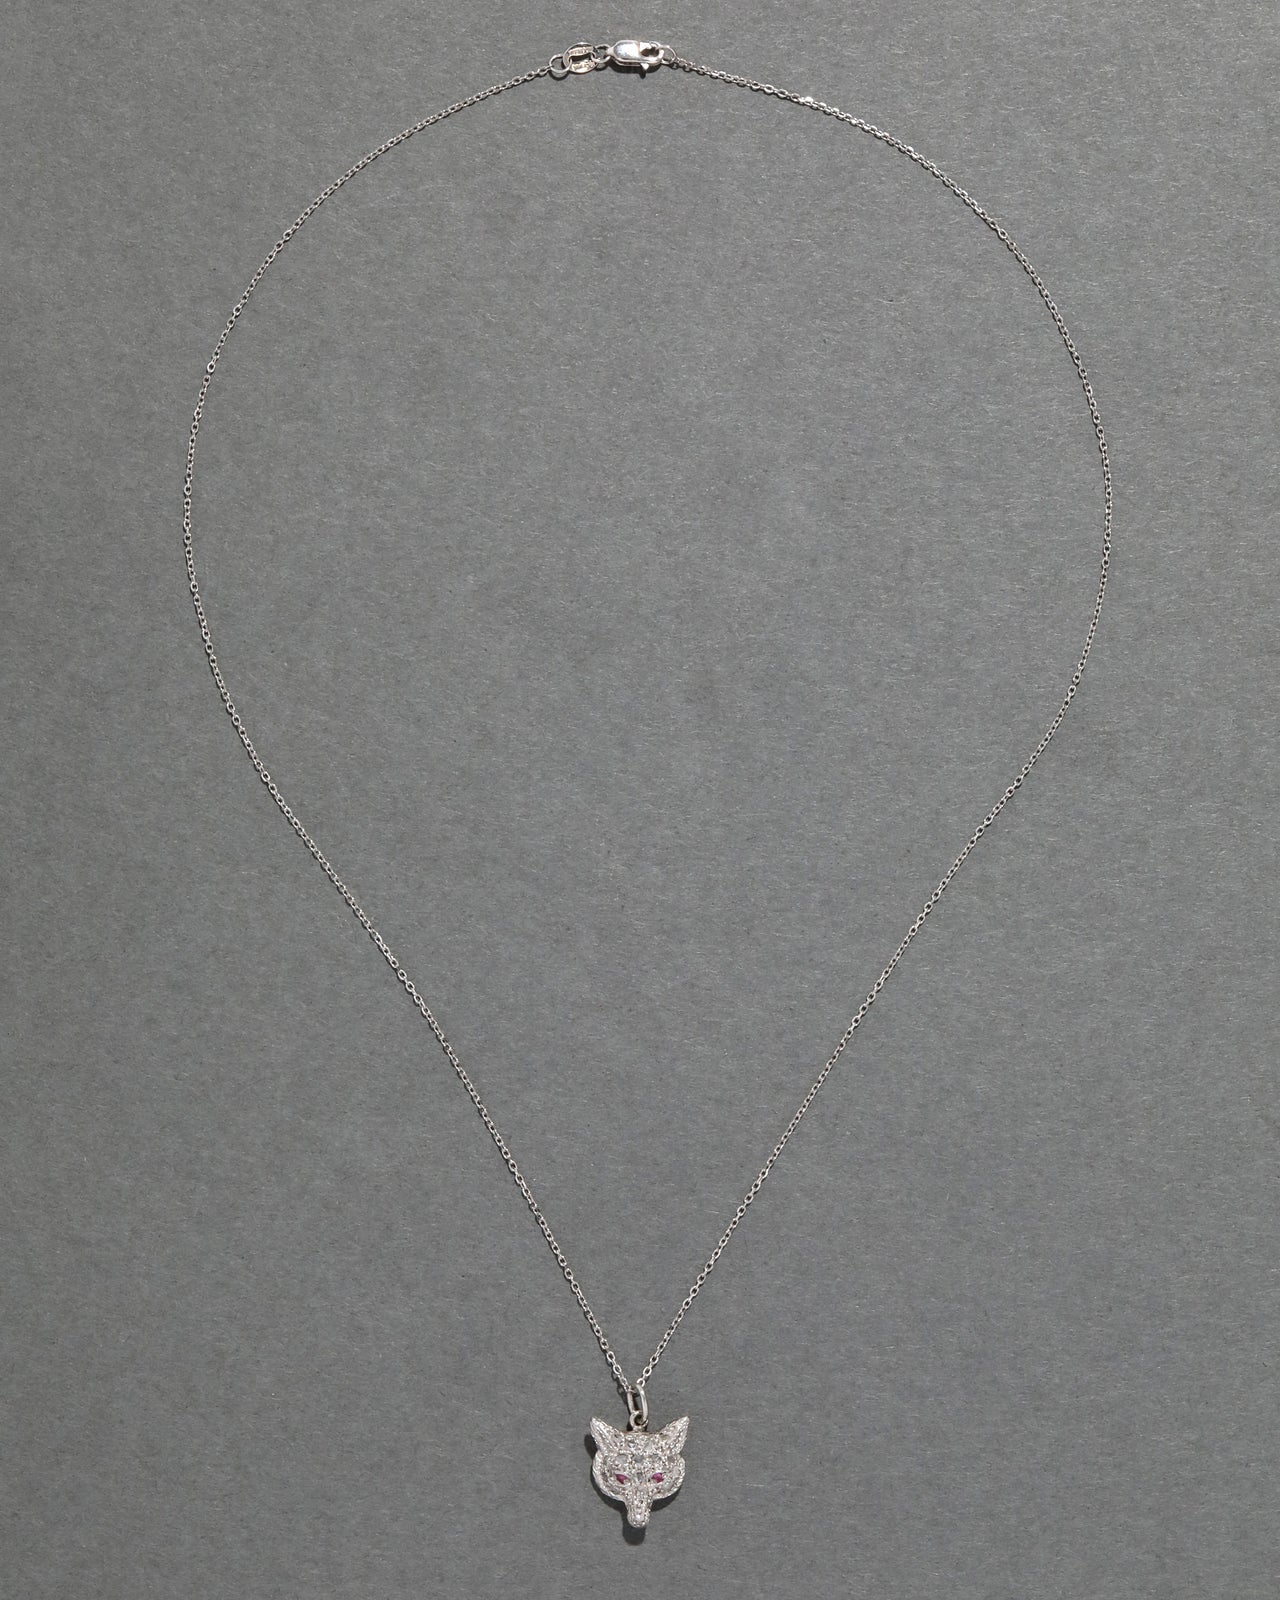 Antique 1920s Platinum Fox Head with Diamond and Rubies Pendant Necklace - Photo 2